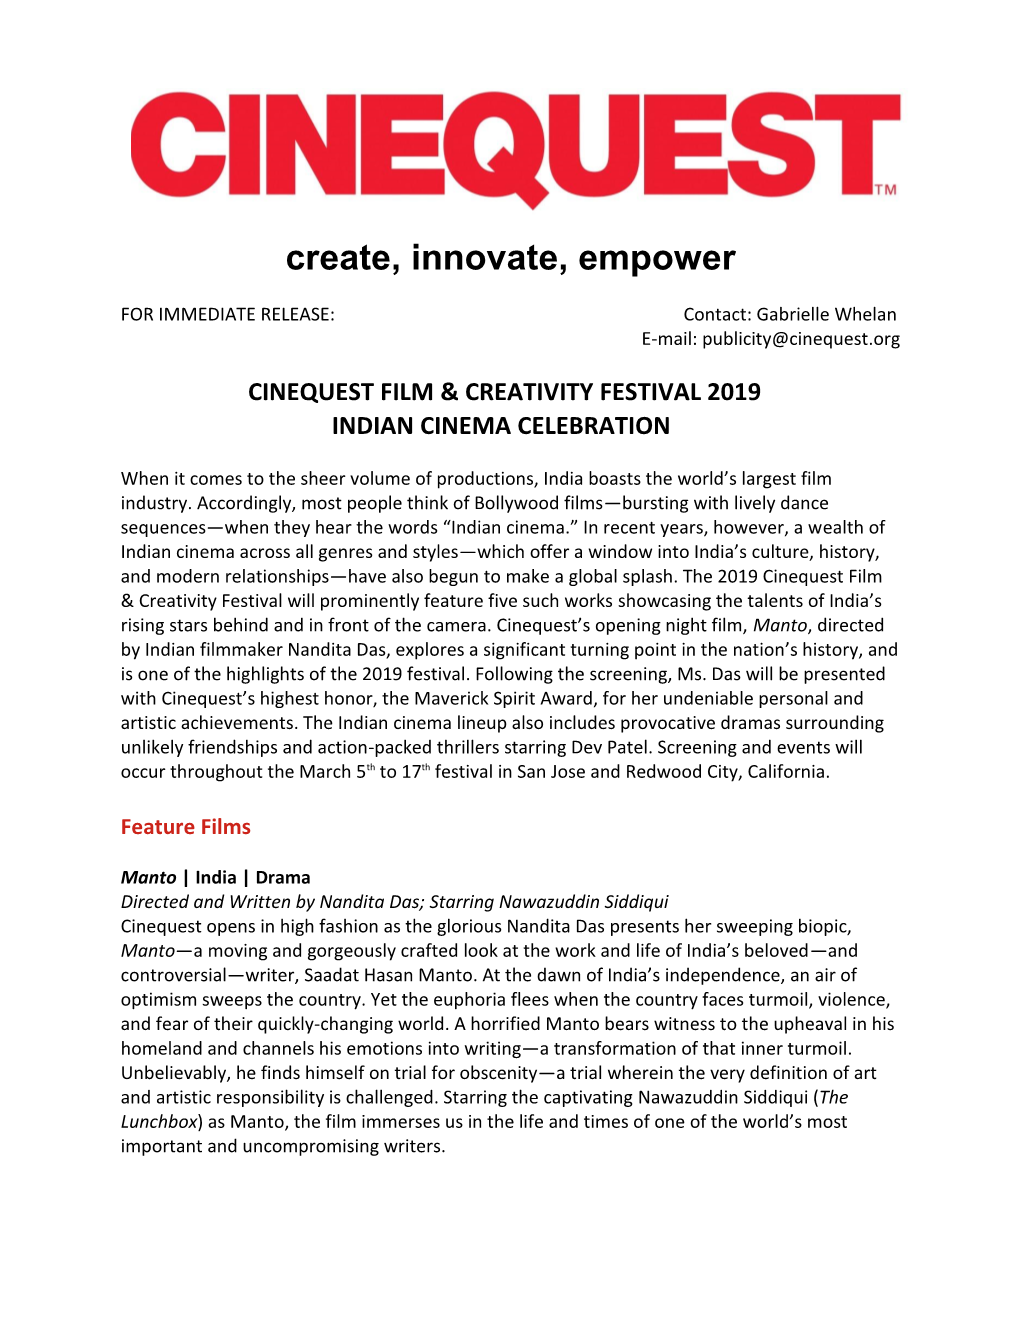 Cinequest Film & Creativity Festival 2019 Indian Cinema Celebration